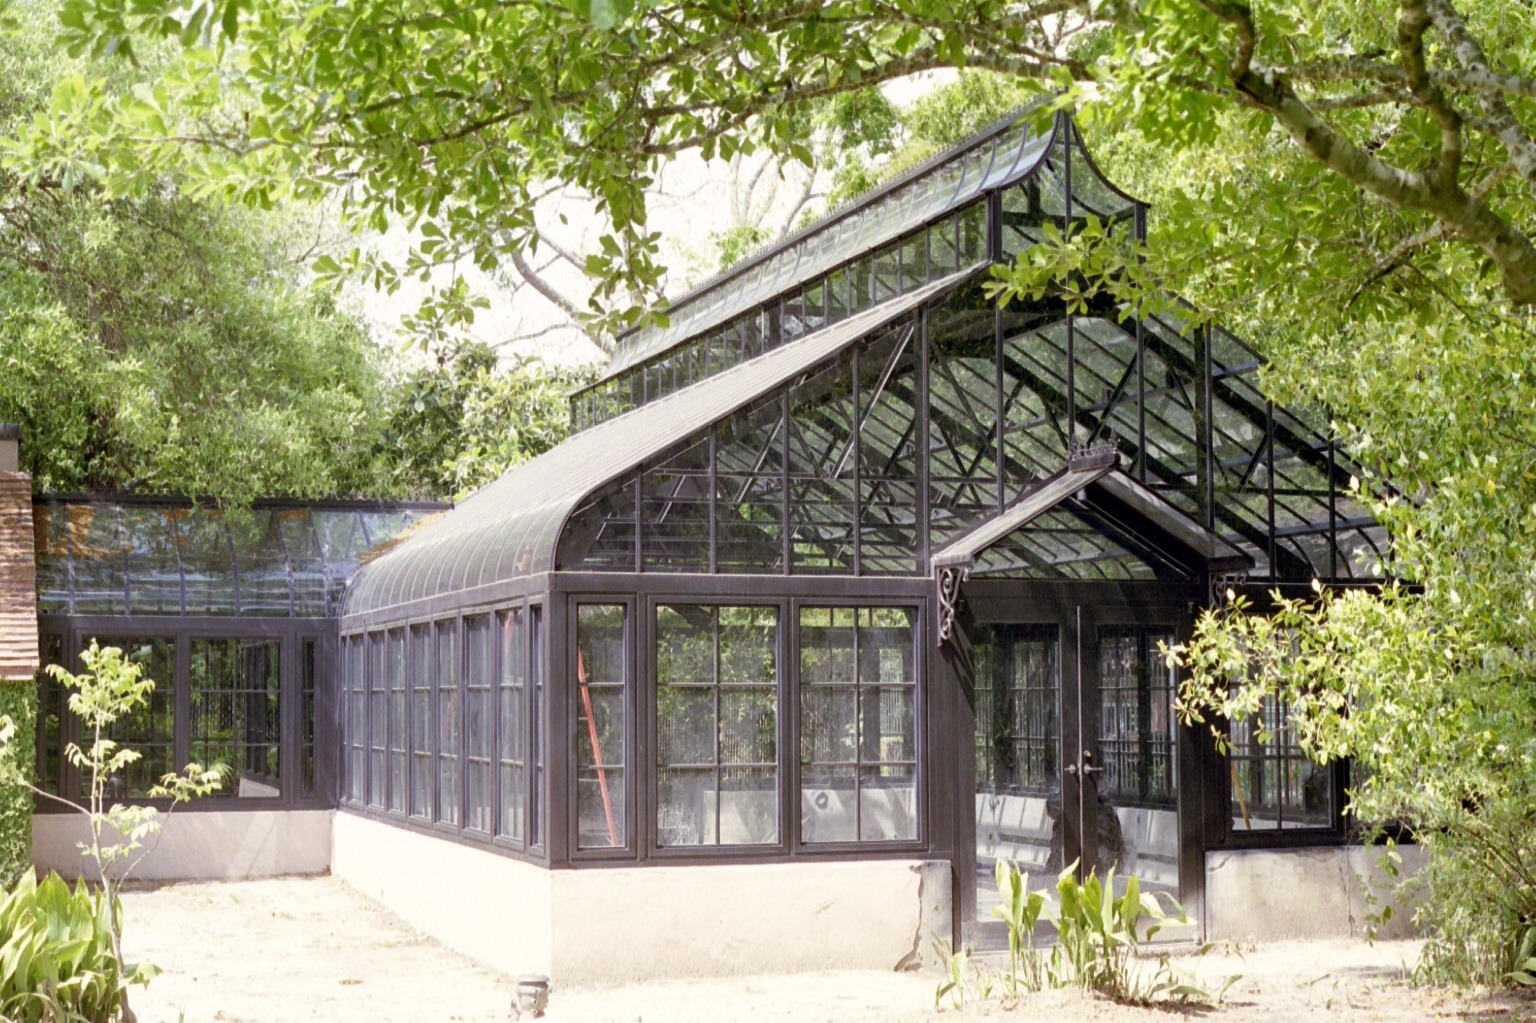 Conservatory greenhouse